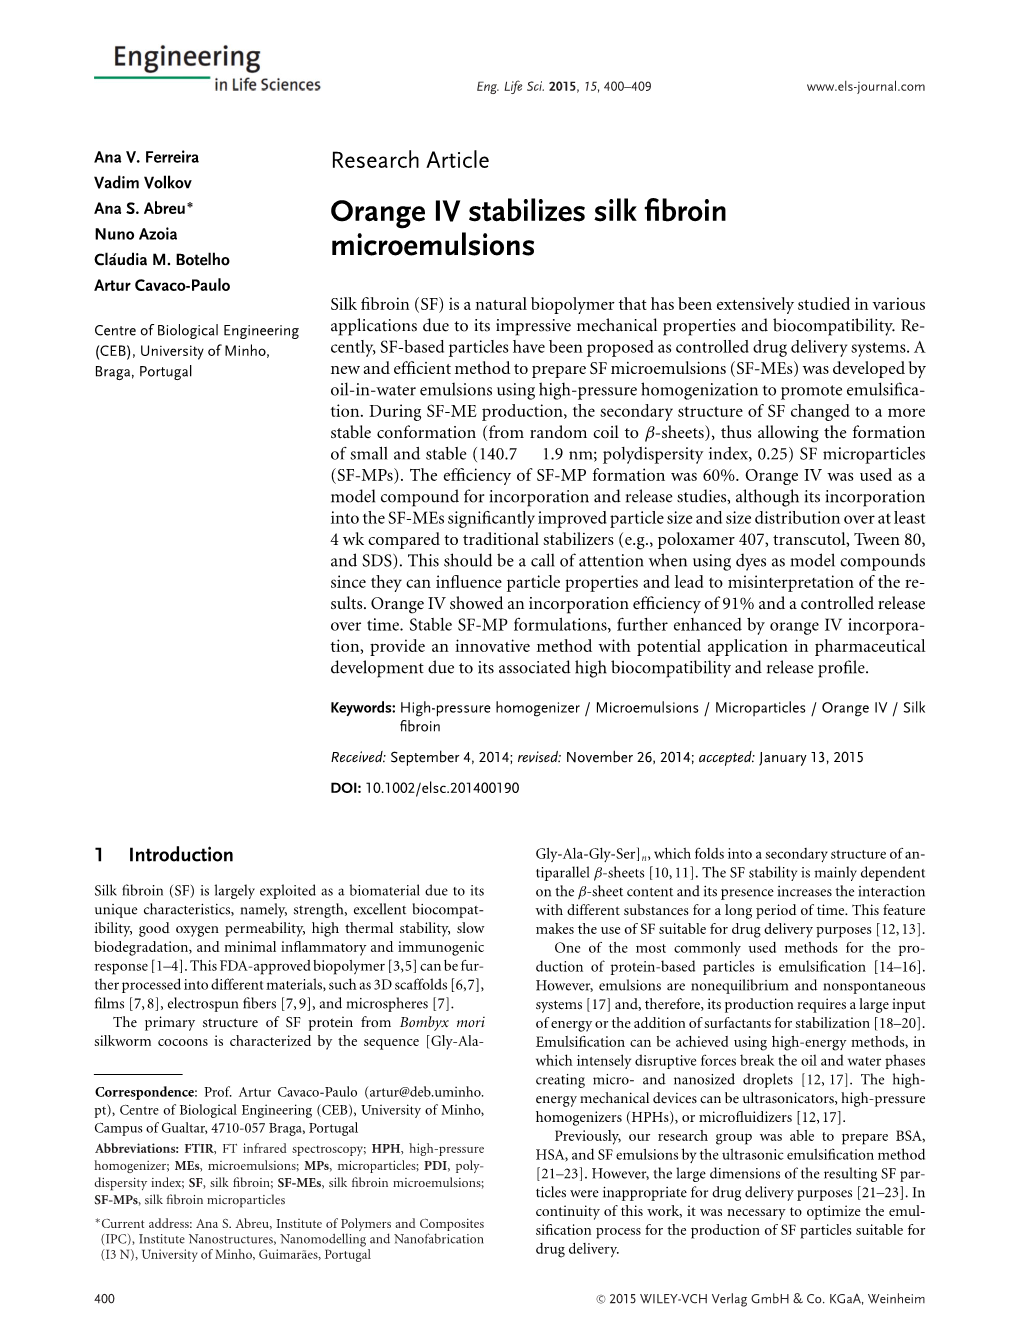 Orange IV Stabilizes Silk Fibroin Microemulsions